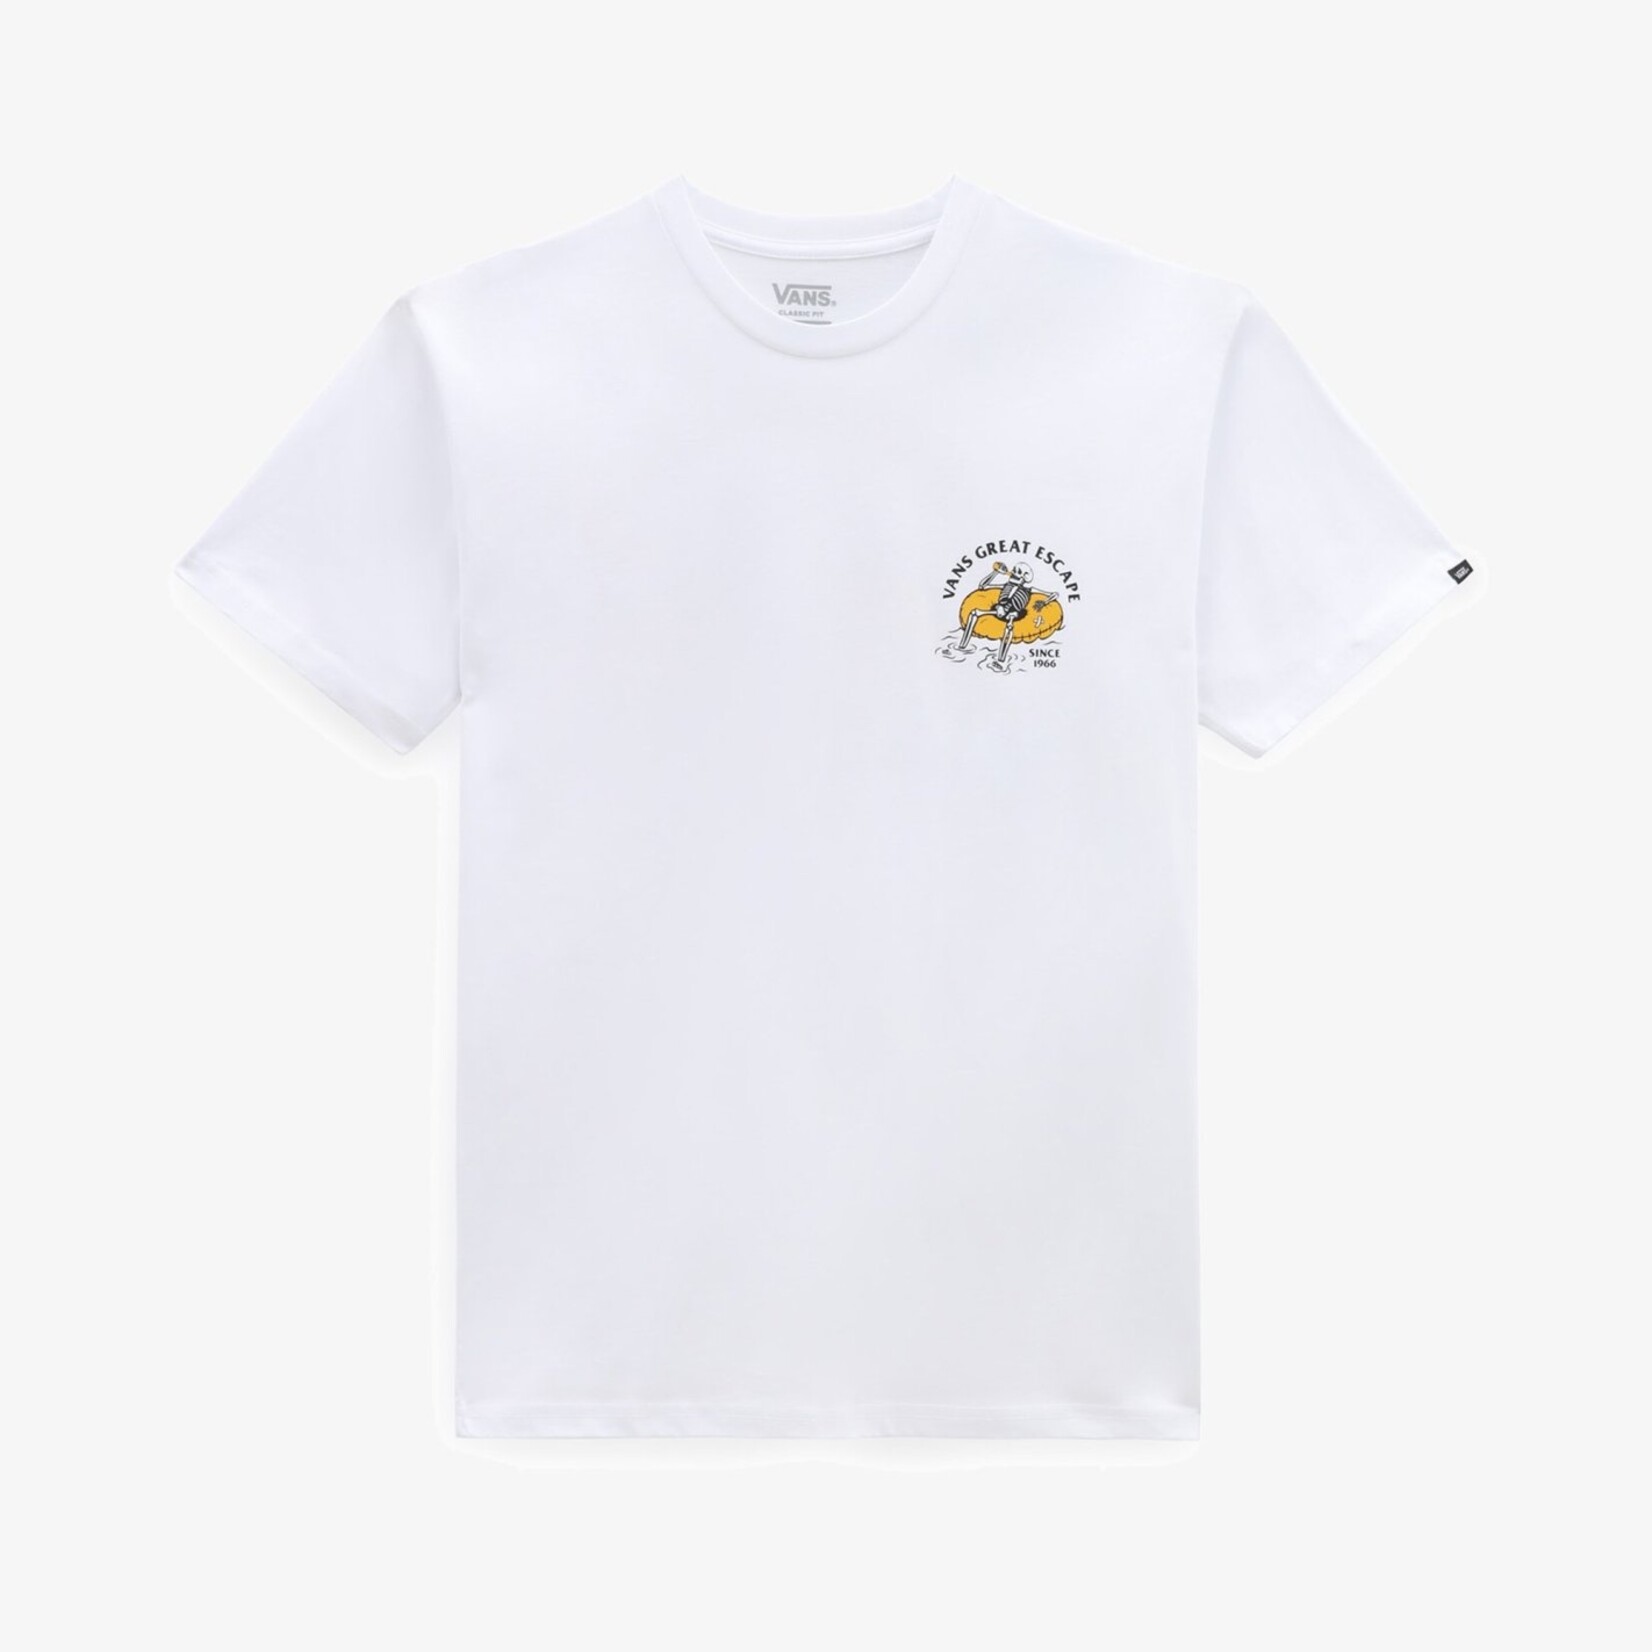 Vans PERMANENT VACATION - T-shirt - VANS White